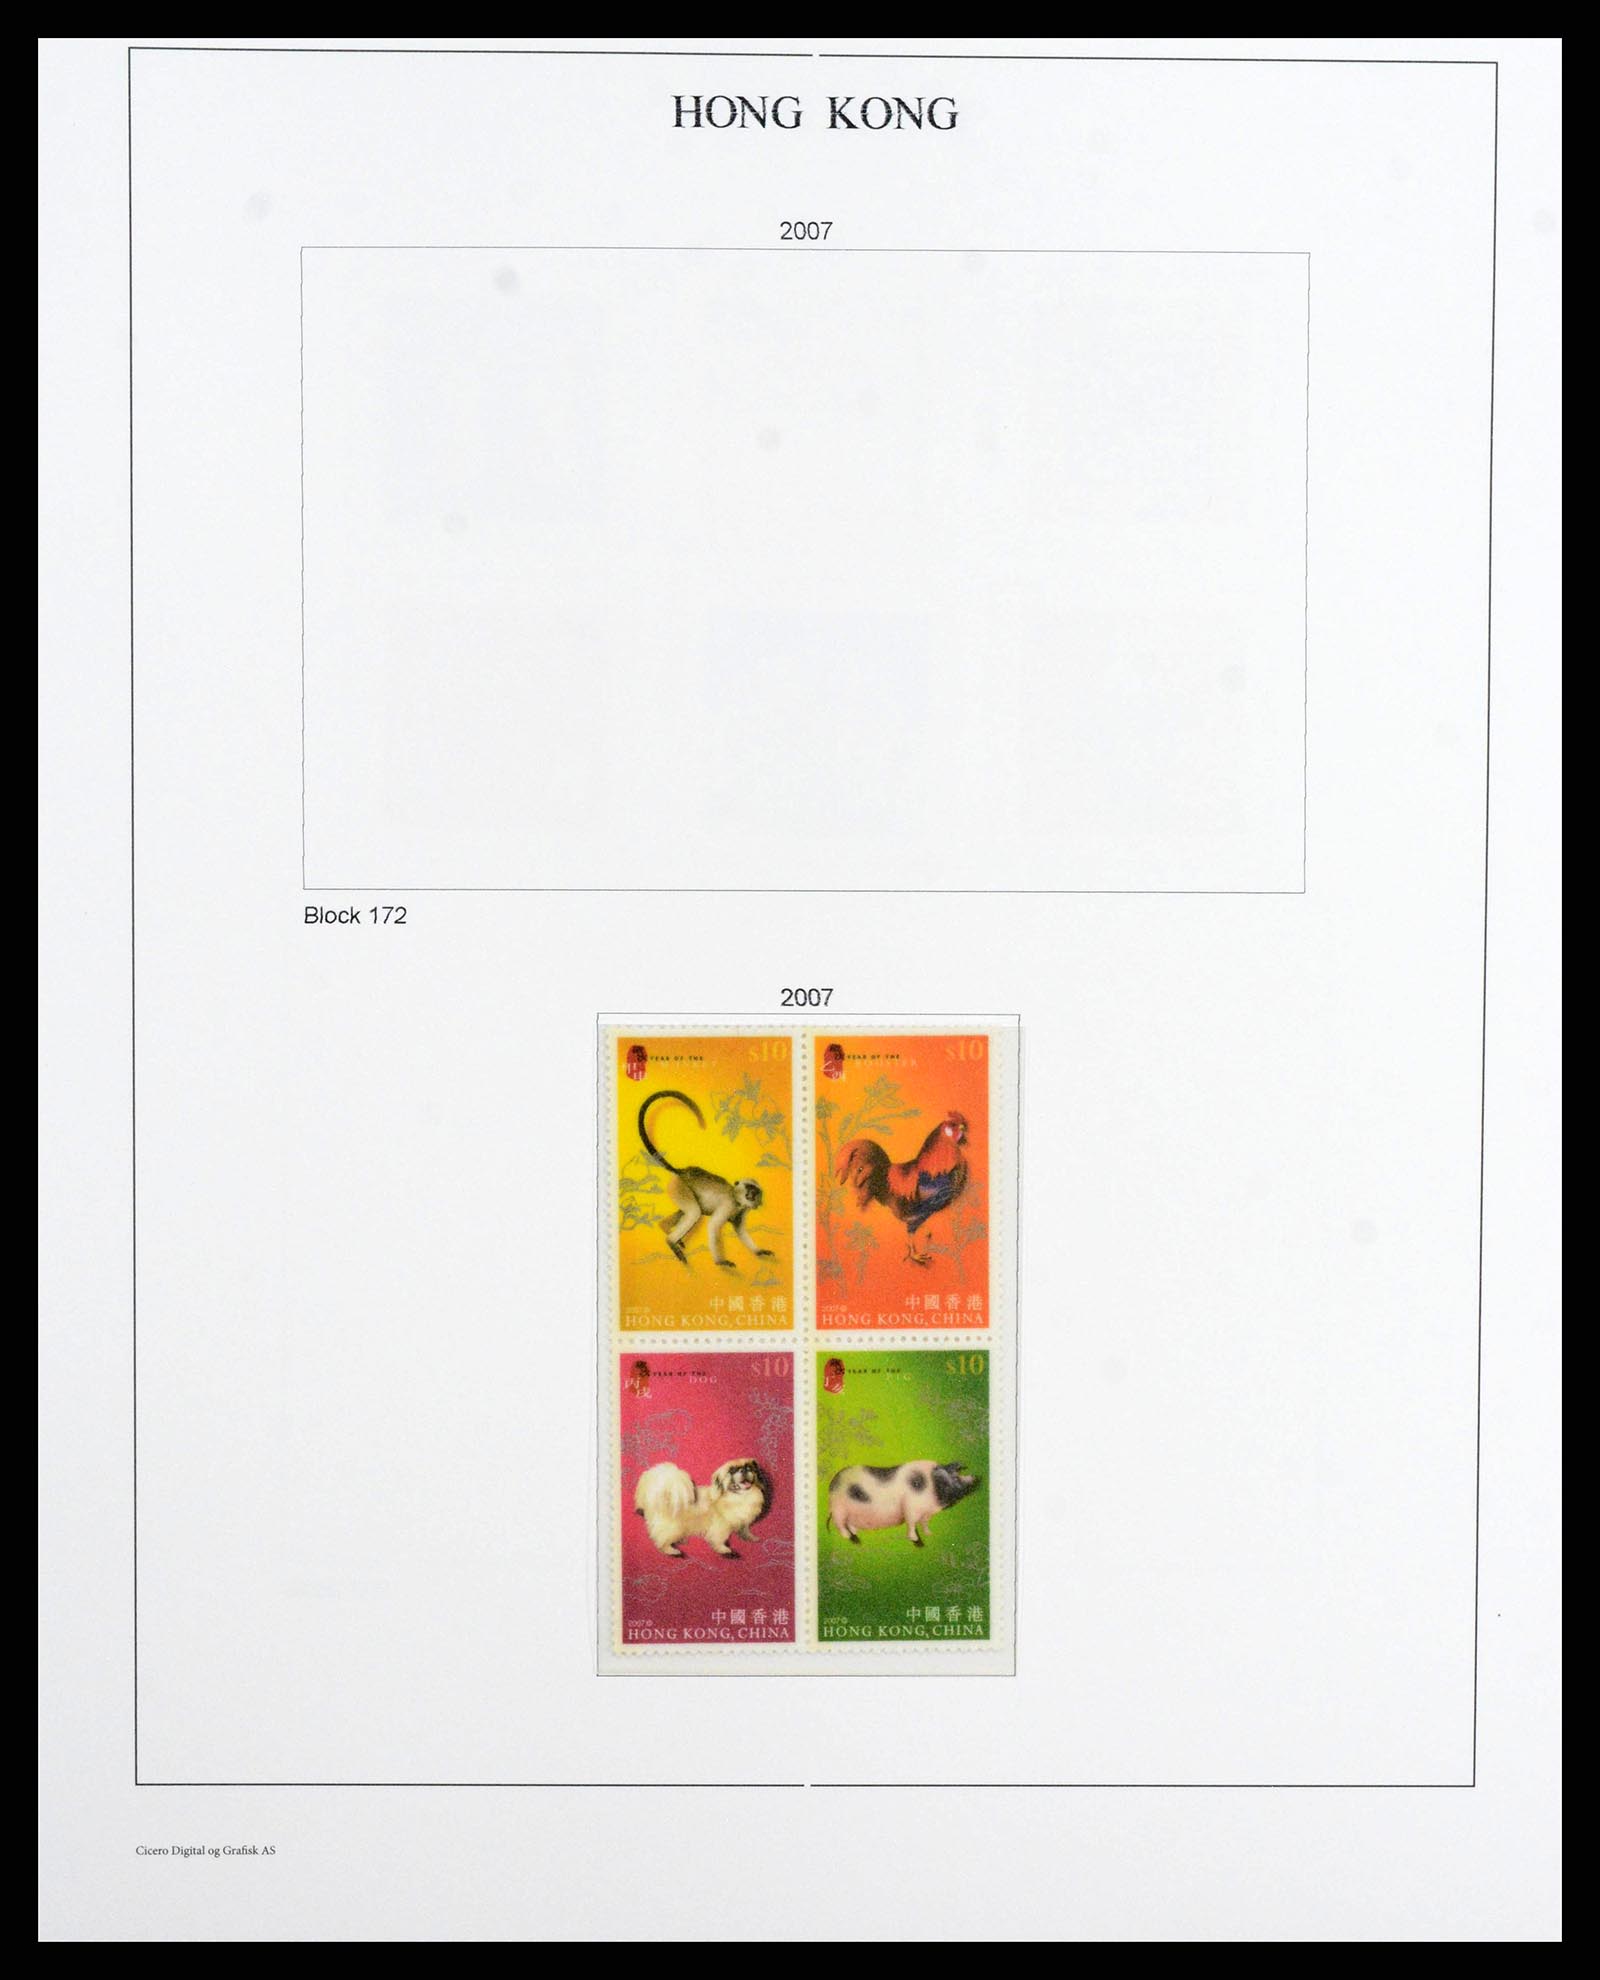 37955 0267 - Stamp collection 37955 Hong Kong supercollection 1862-2007.